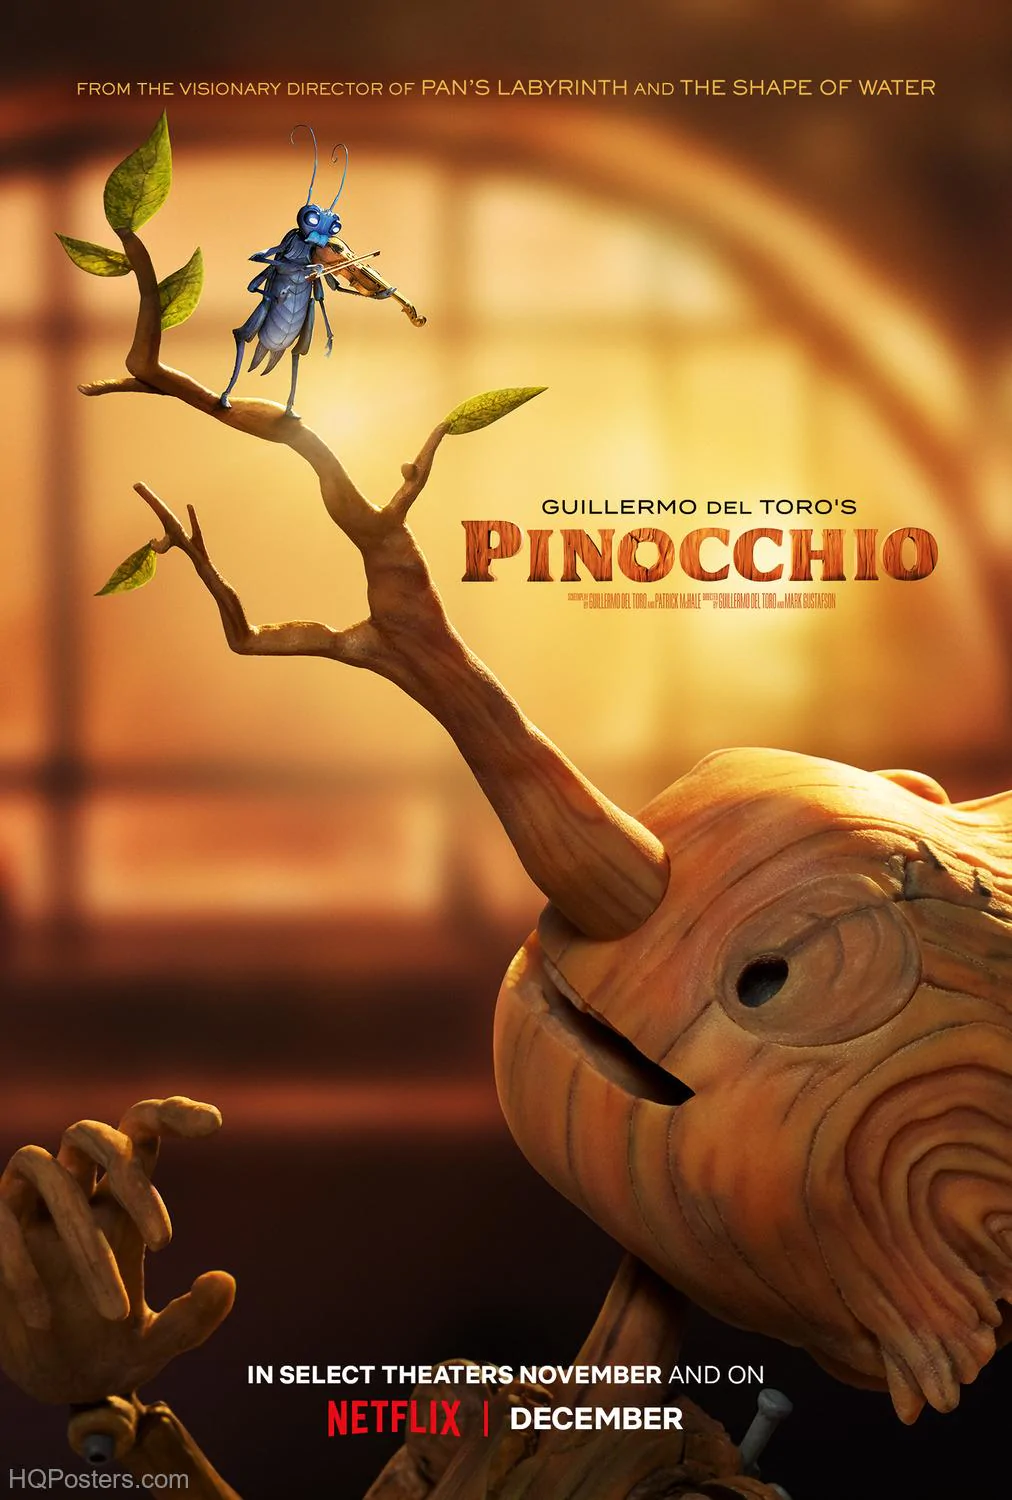 Guillermo Del Toro's Pinocchio packshot